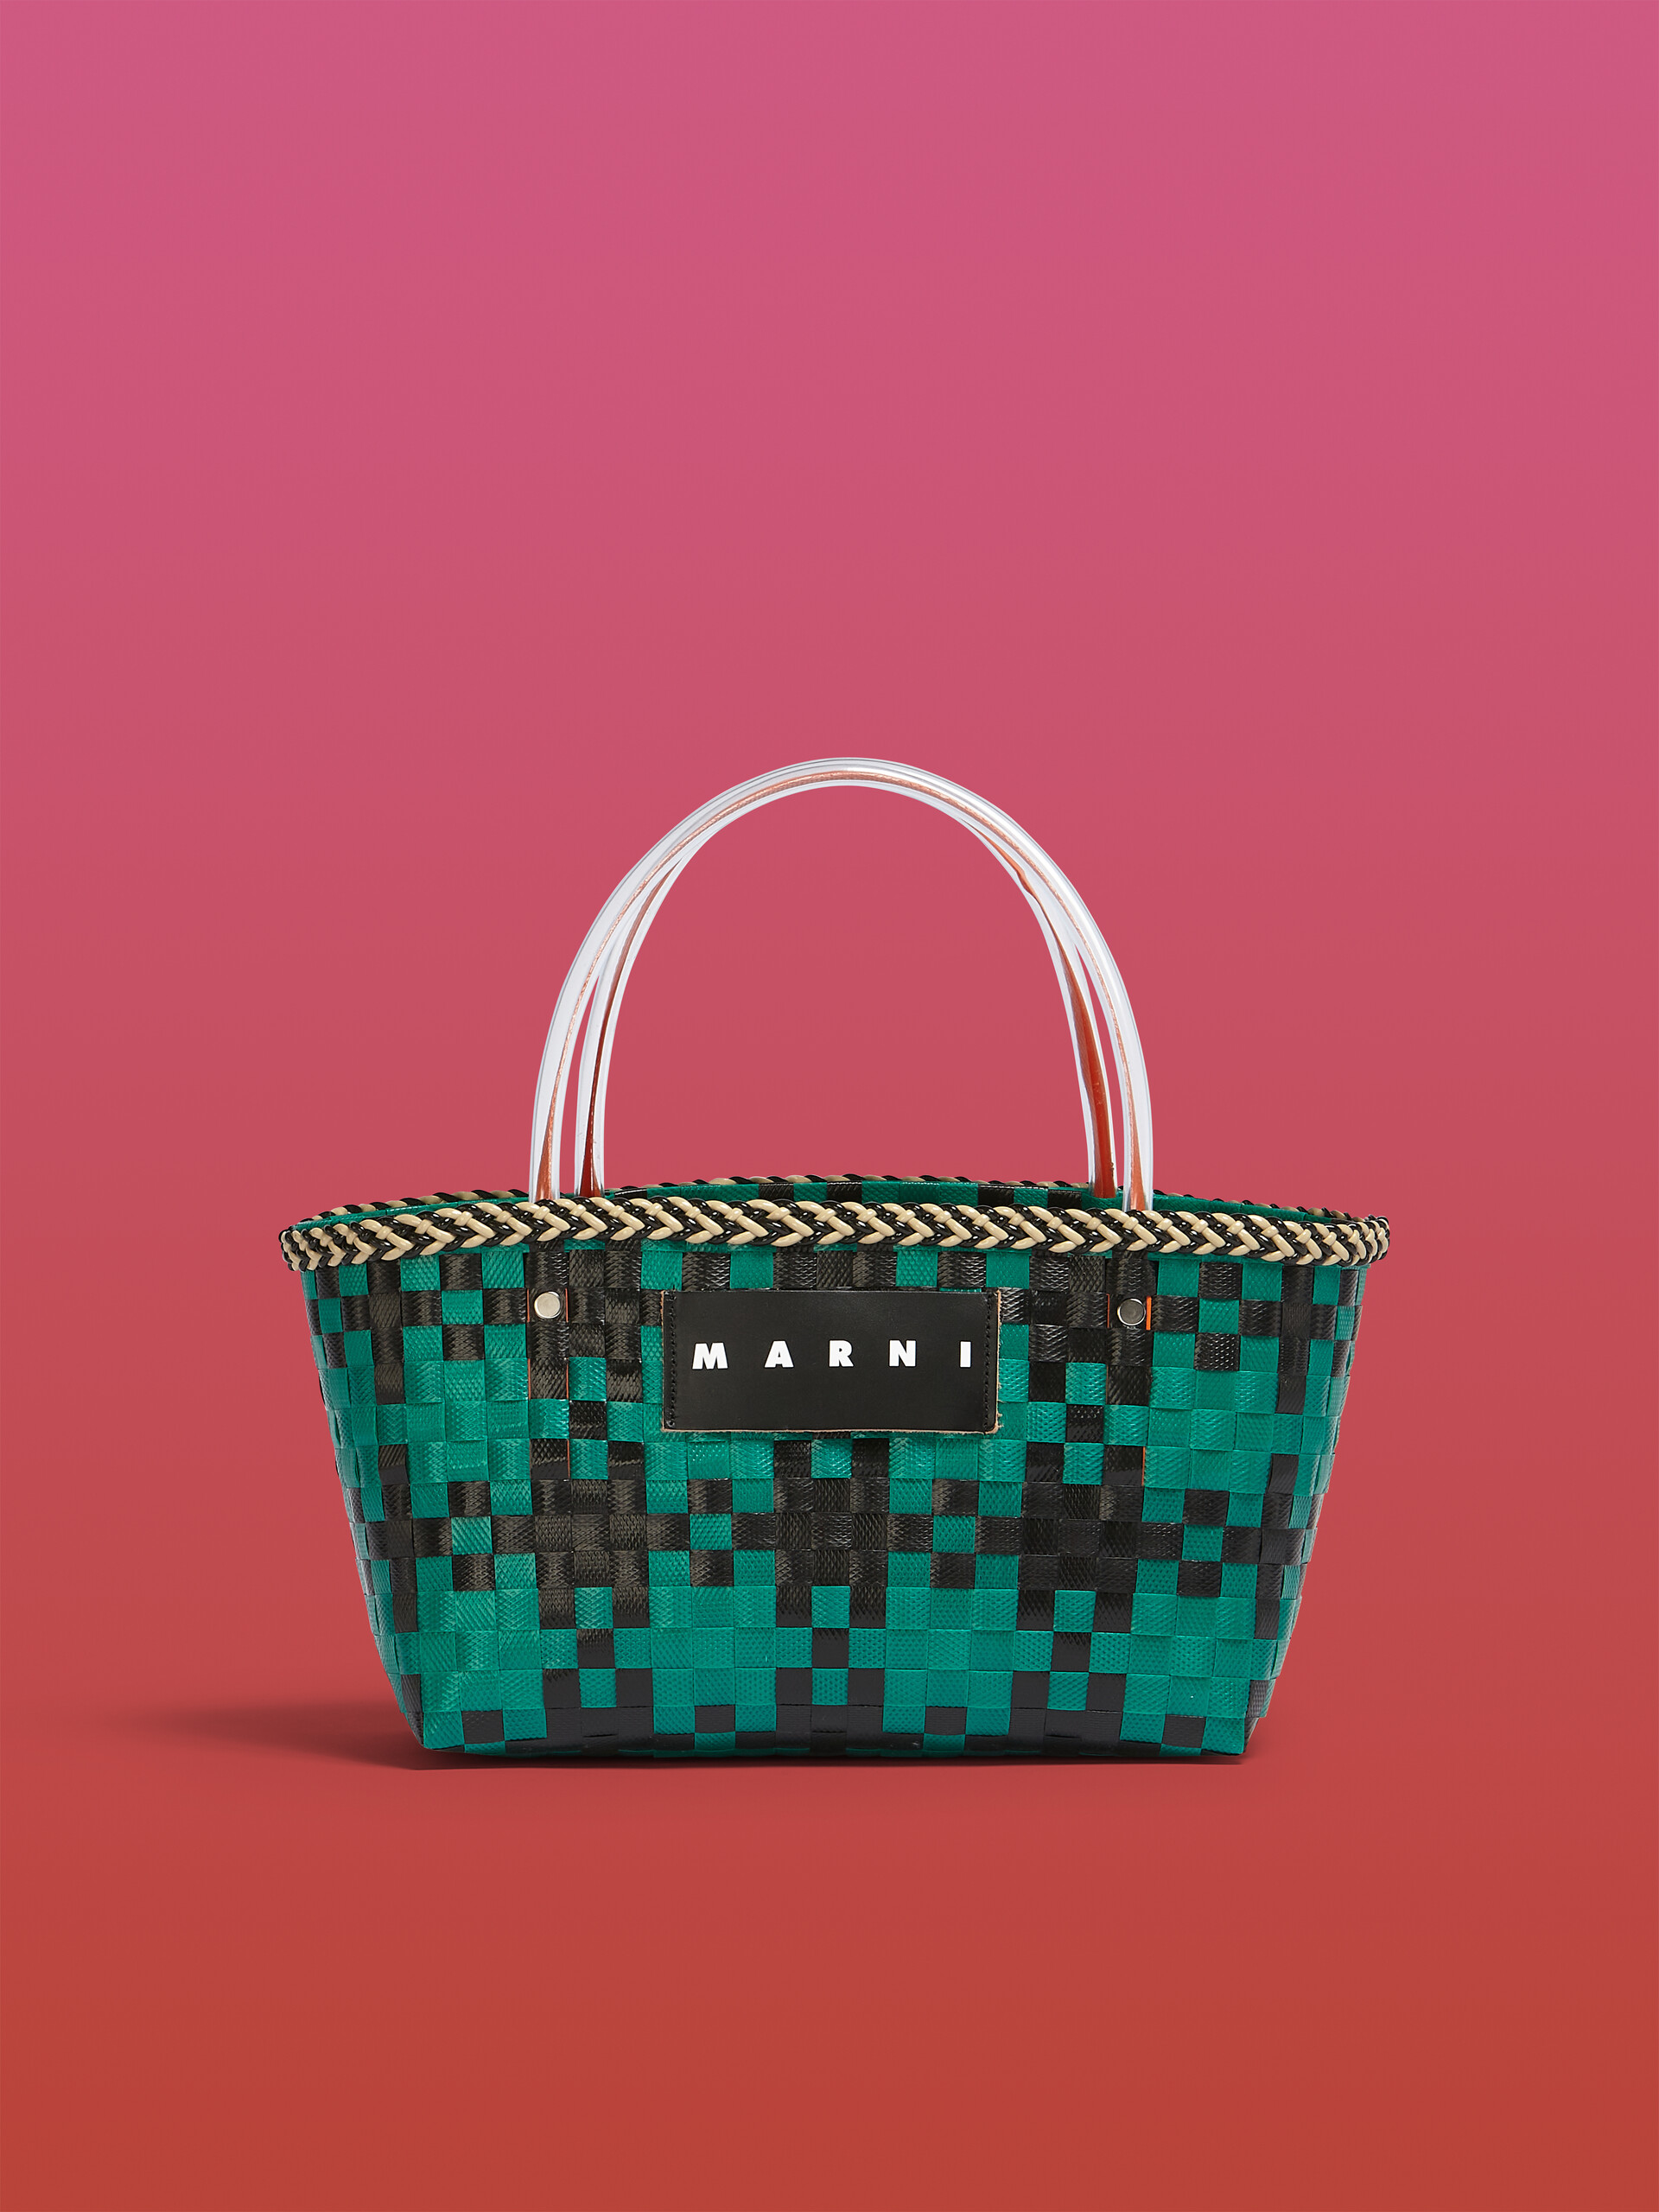 MARNI MARKET CHECK BAG in black and green tartan woven material - Shopping Bags - Image 1